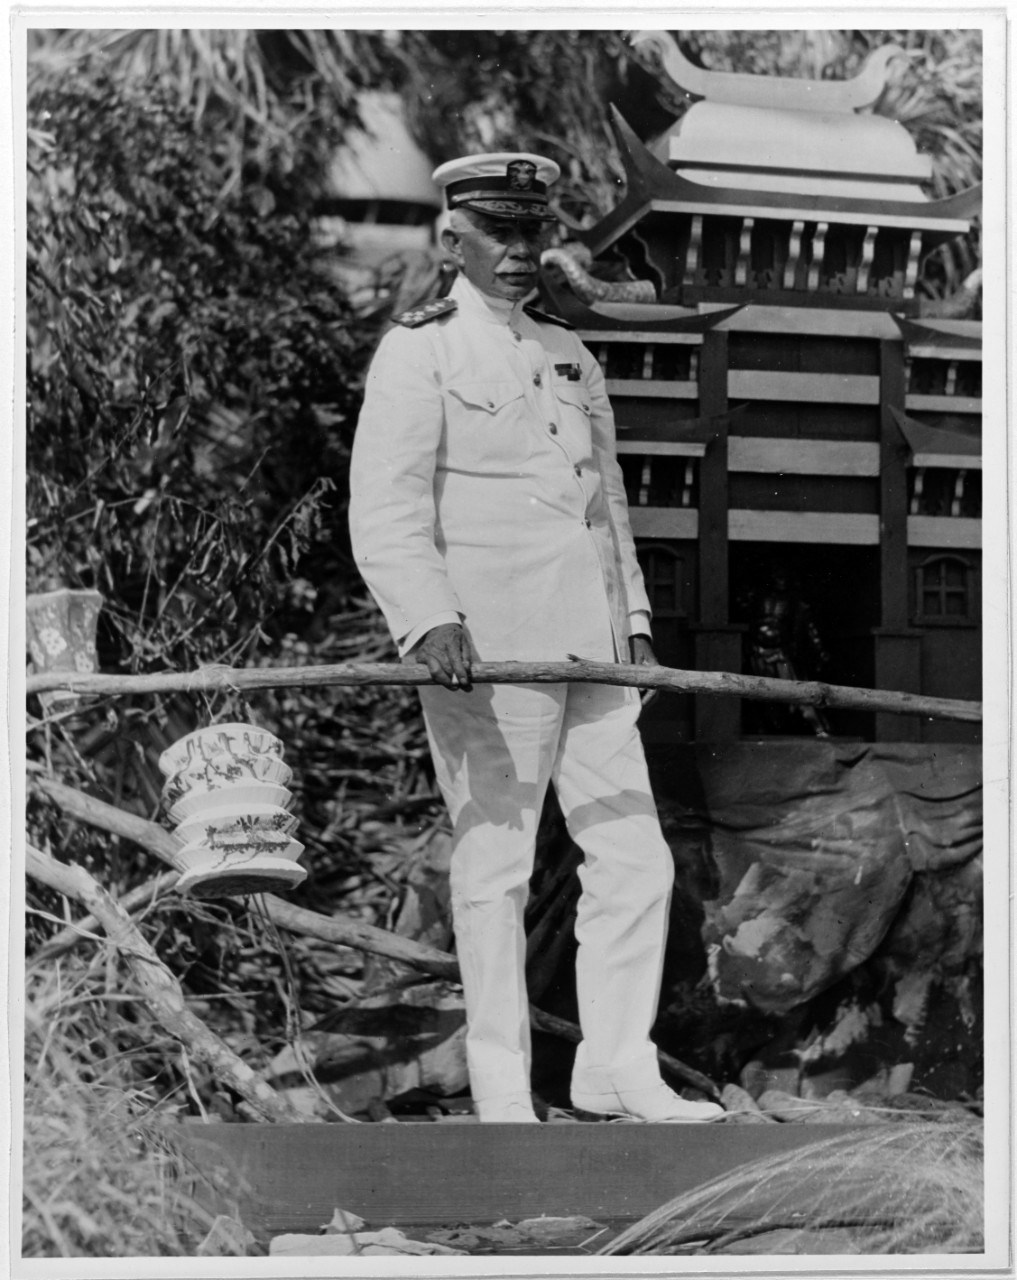 Admiral Hilary P. Jones, USN